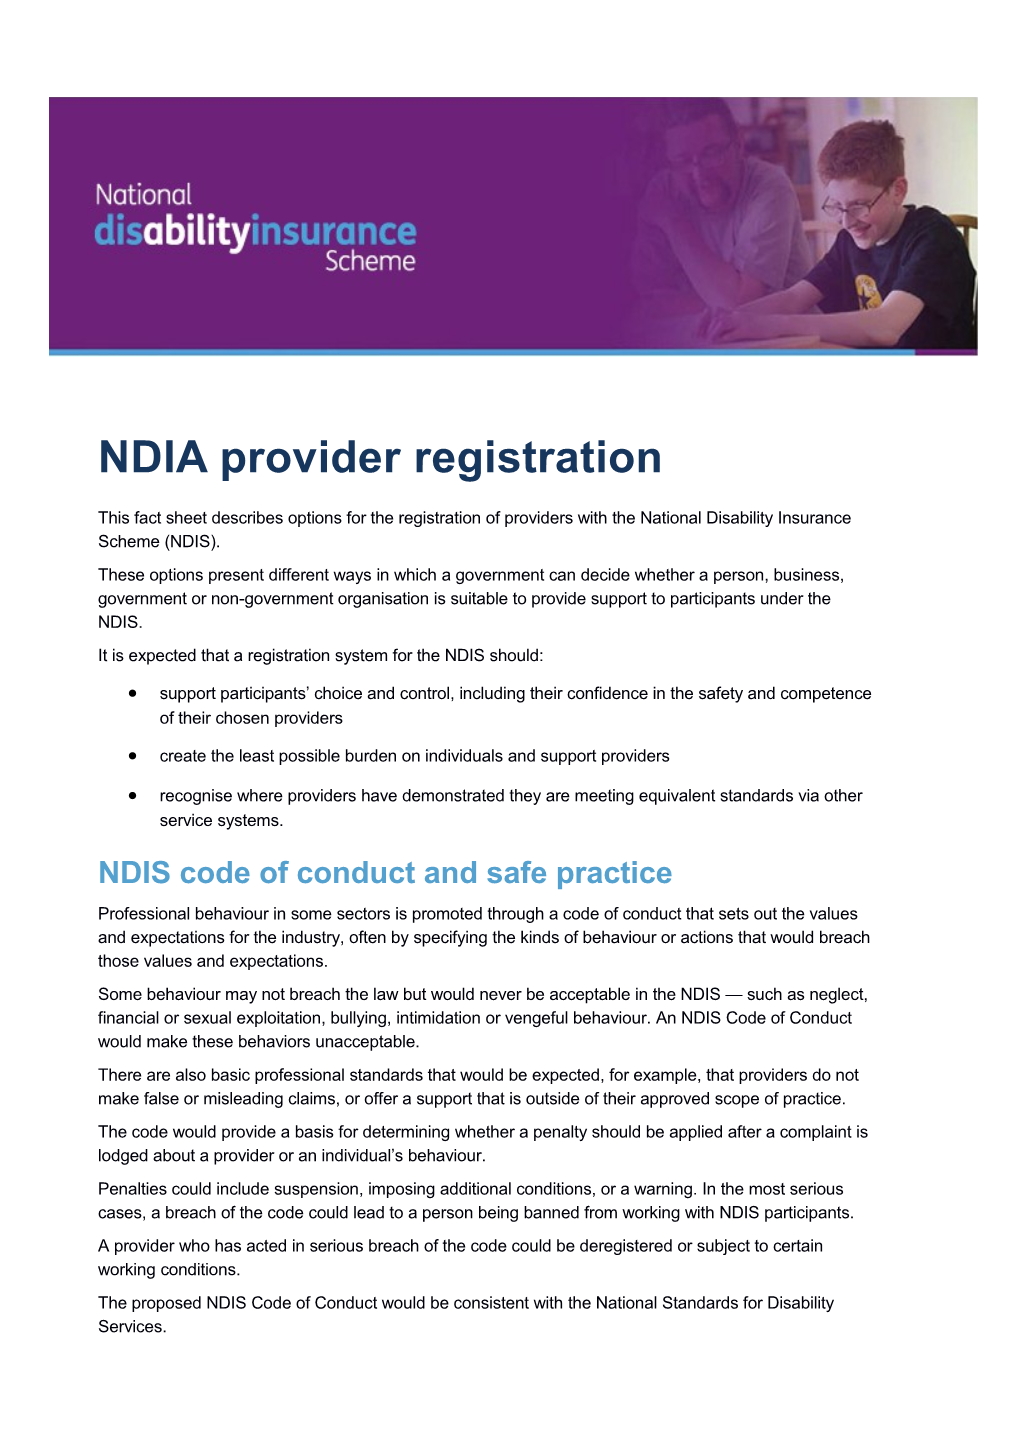 NDIA Provider Registration